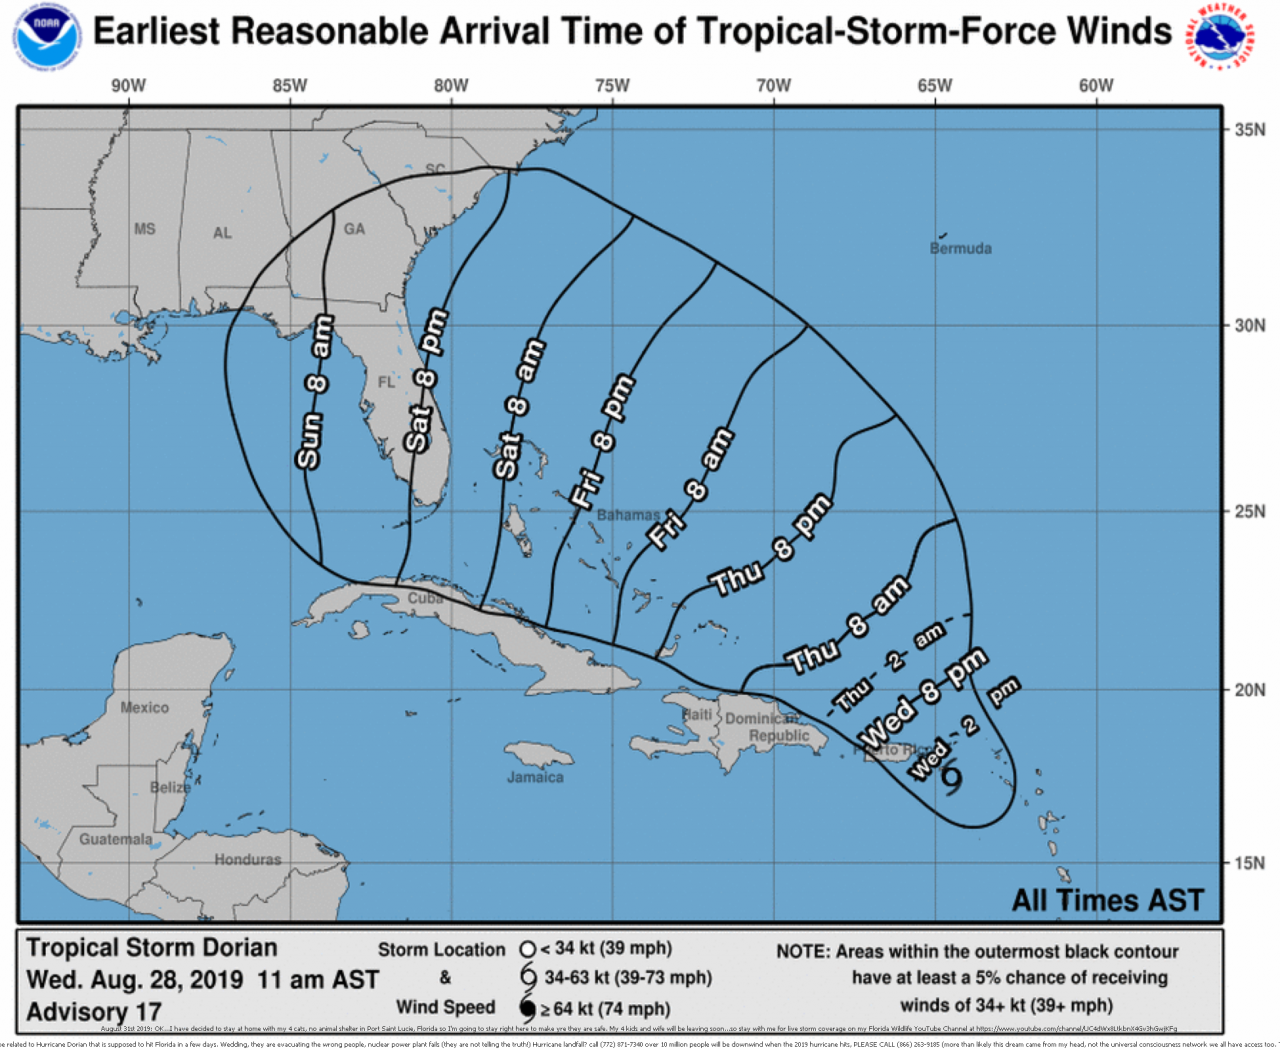 Hurricane Dorian Aug 2019 prediction by Psychic Brian Ladd dorian-arrival-time
Hurricane Dorian Aug 2019 prediction by Psychic Brian Ladd dorian-arrival-time
